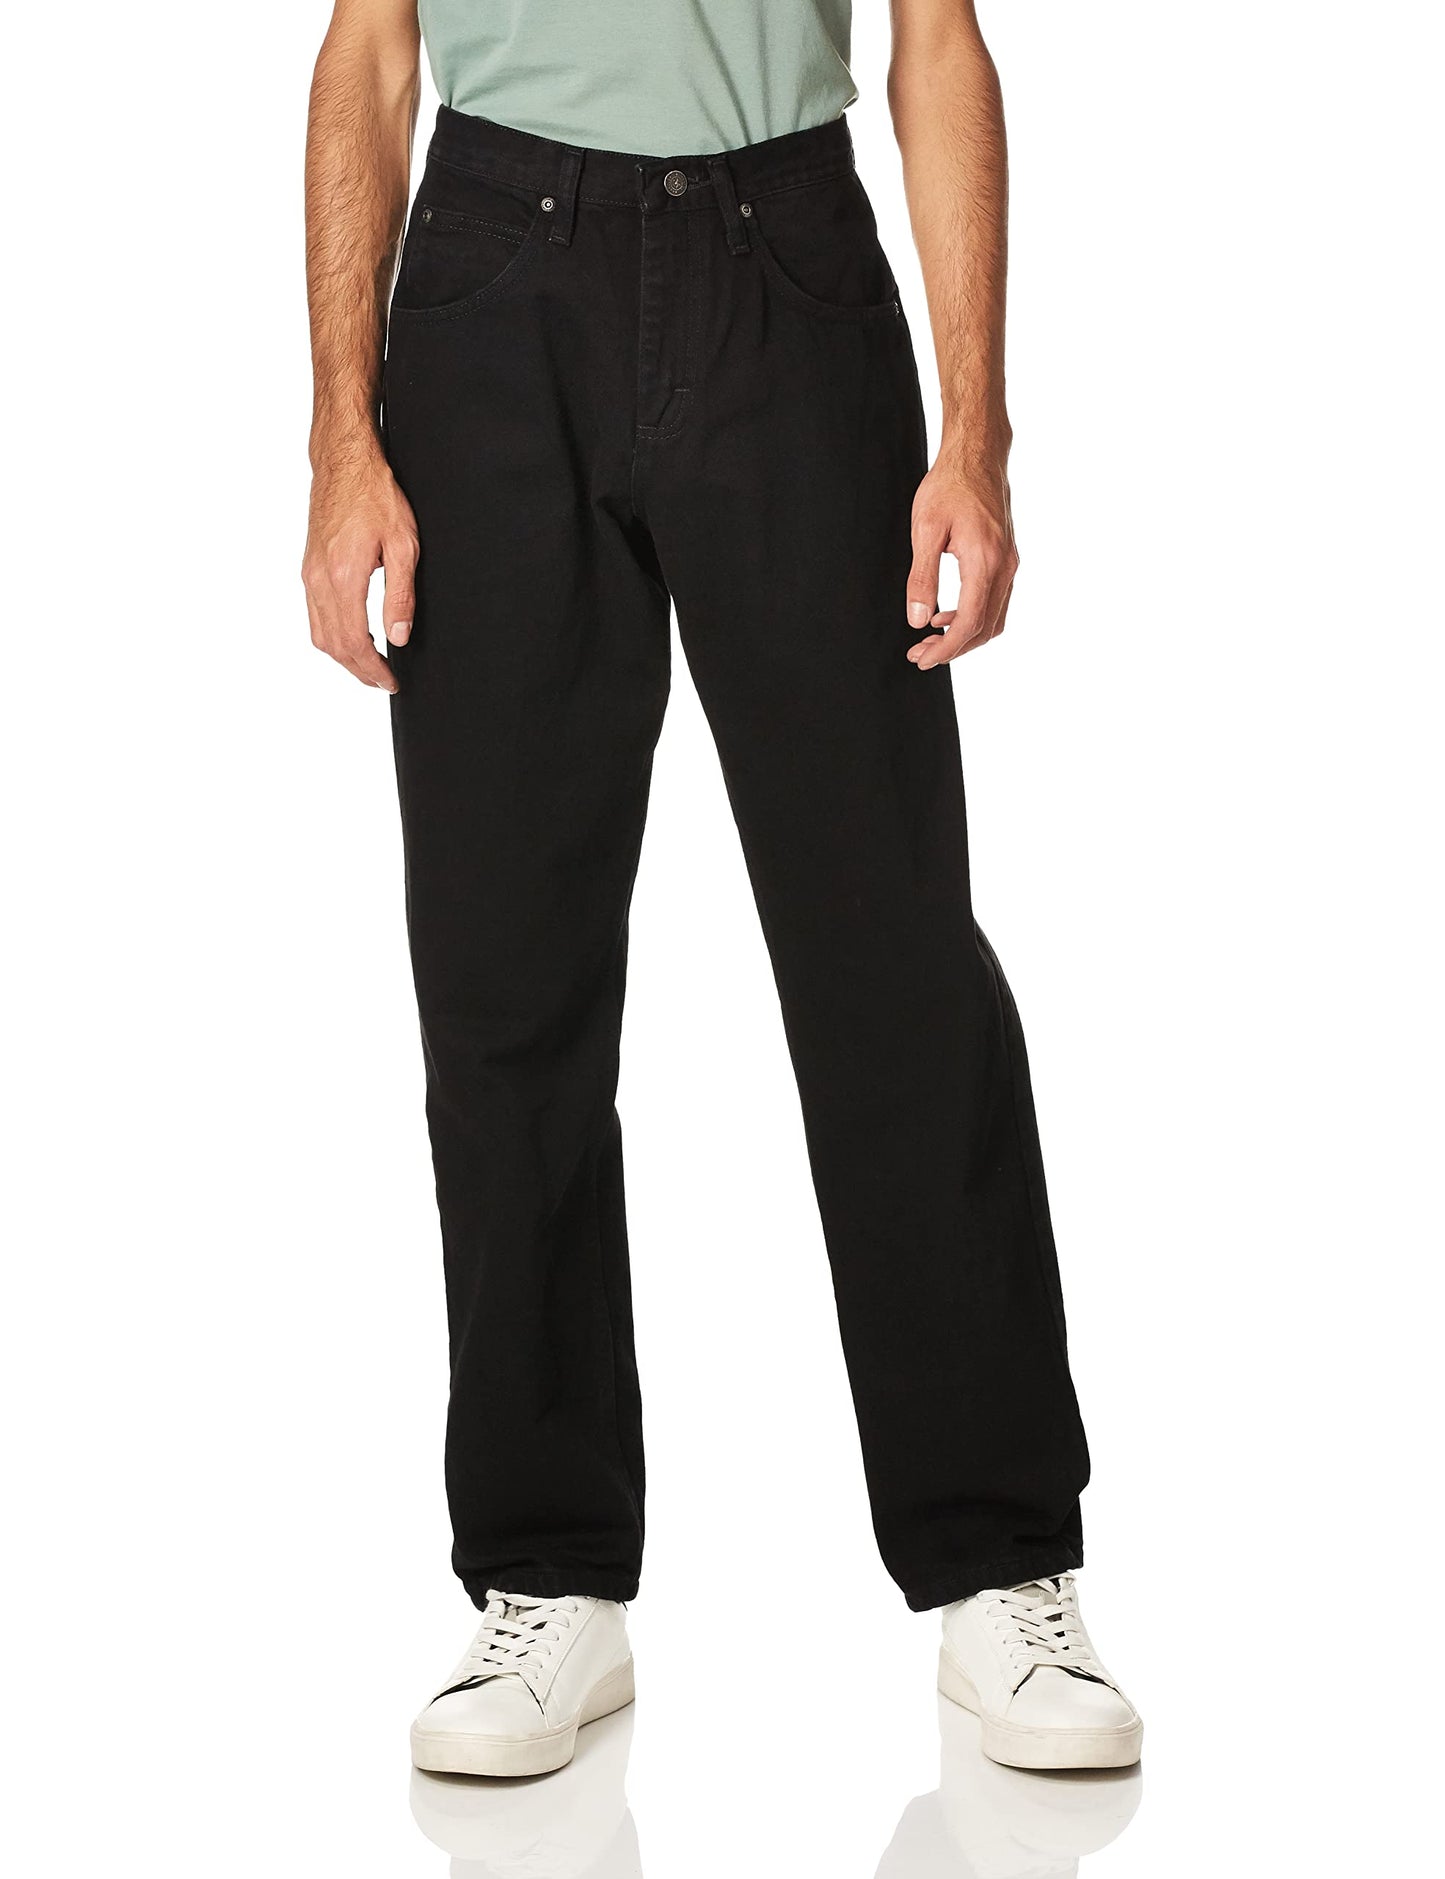 Wrangler Authentics Men's Big & Tall Classic 5-Pocket Relaxed Fit Cotton Jean, Black, 44W x 32L